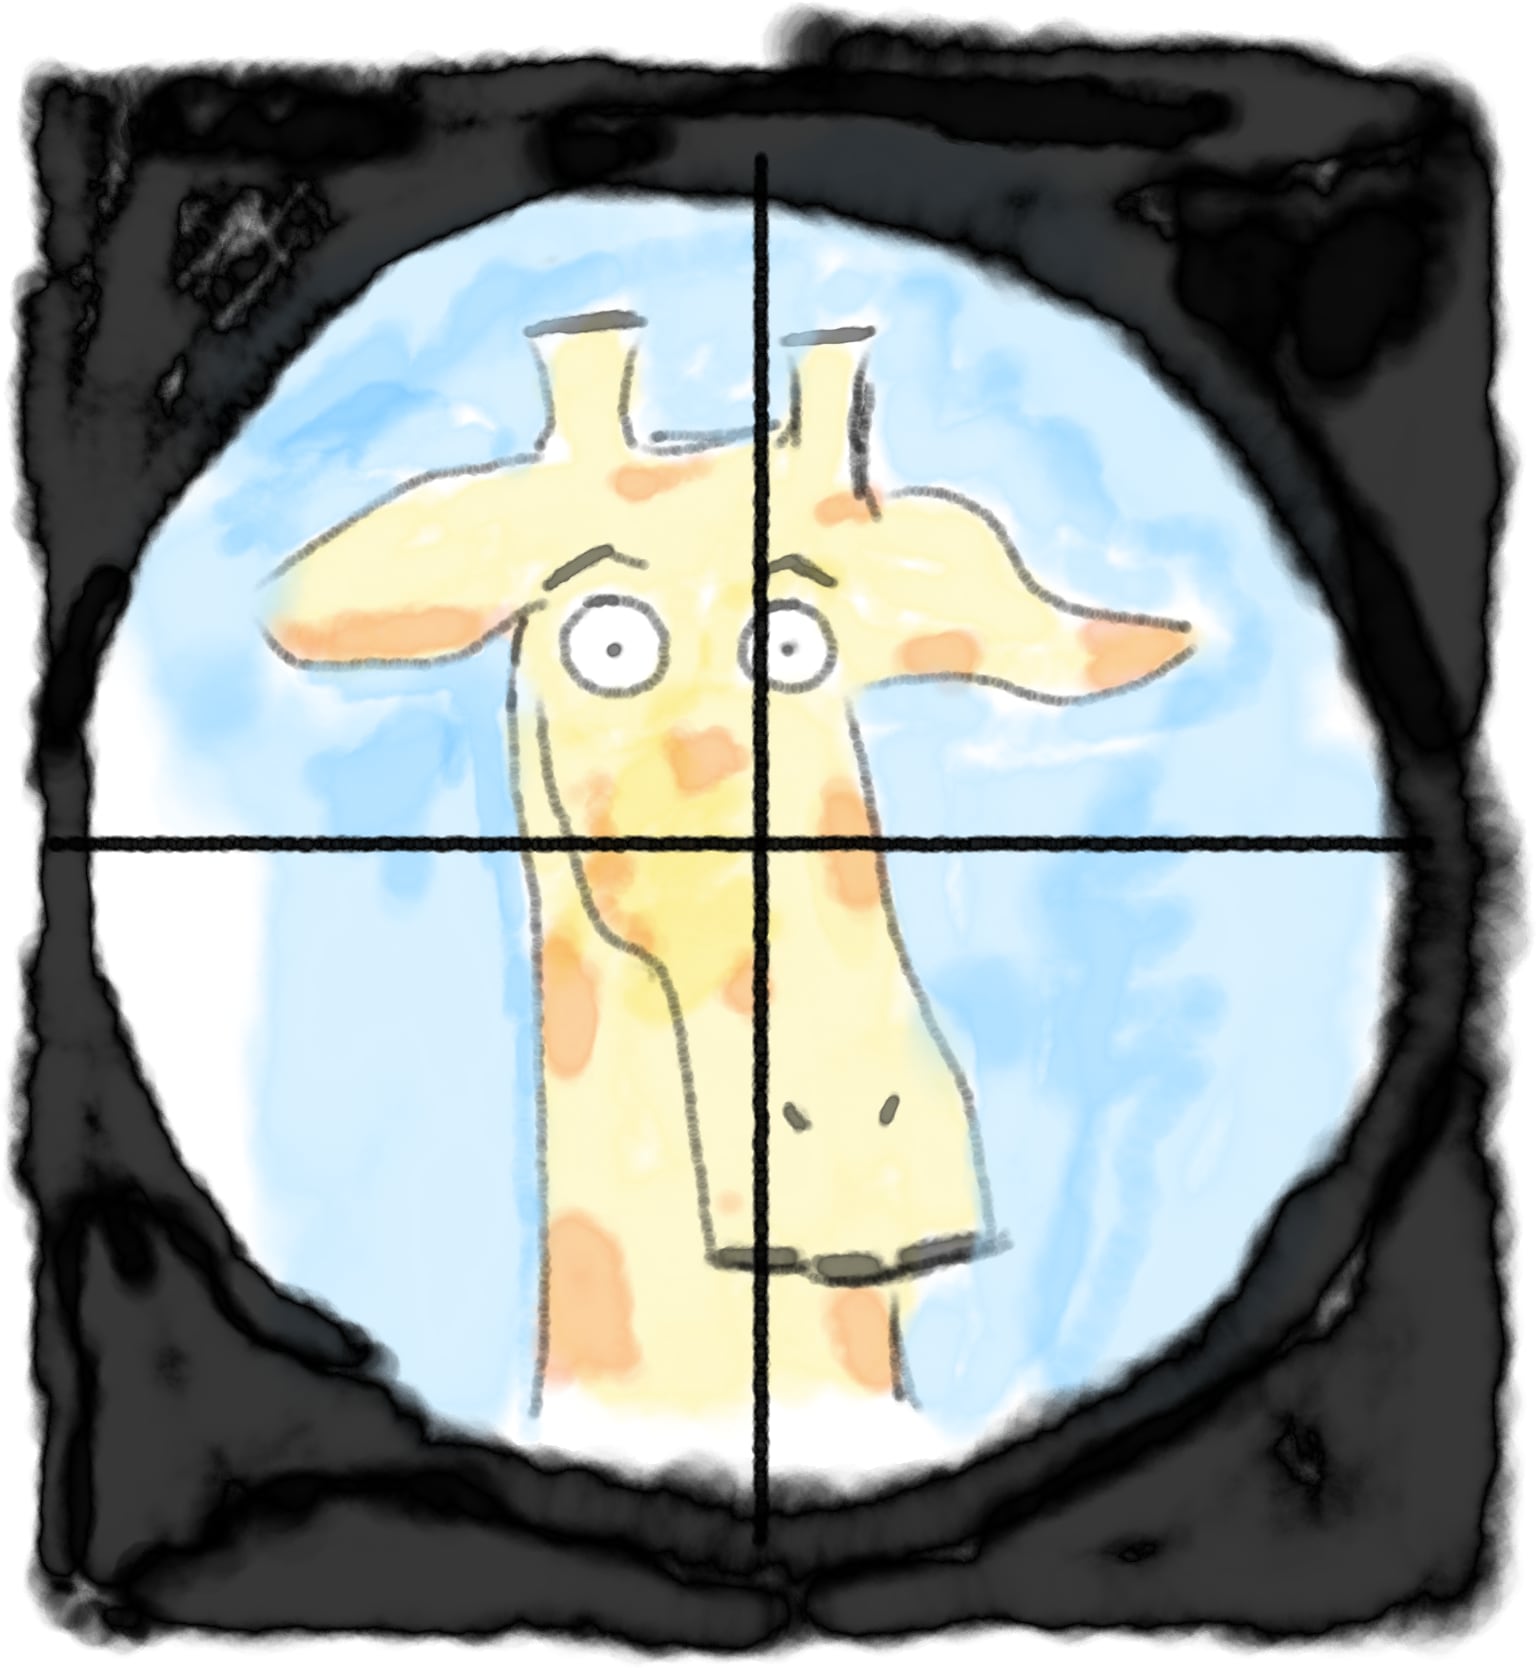 A giraffe in crosshairs.